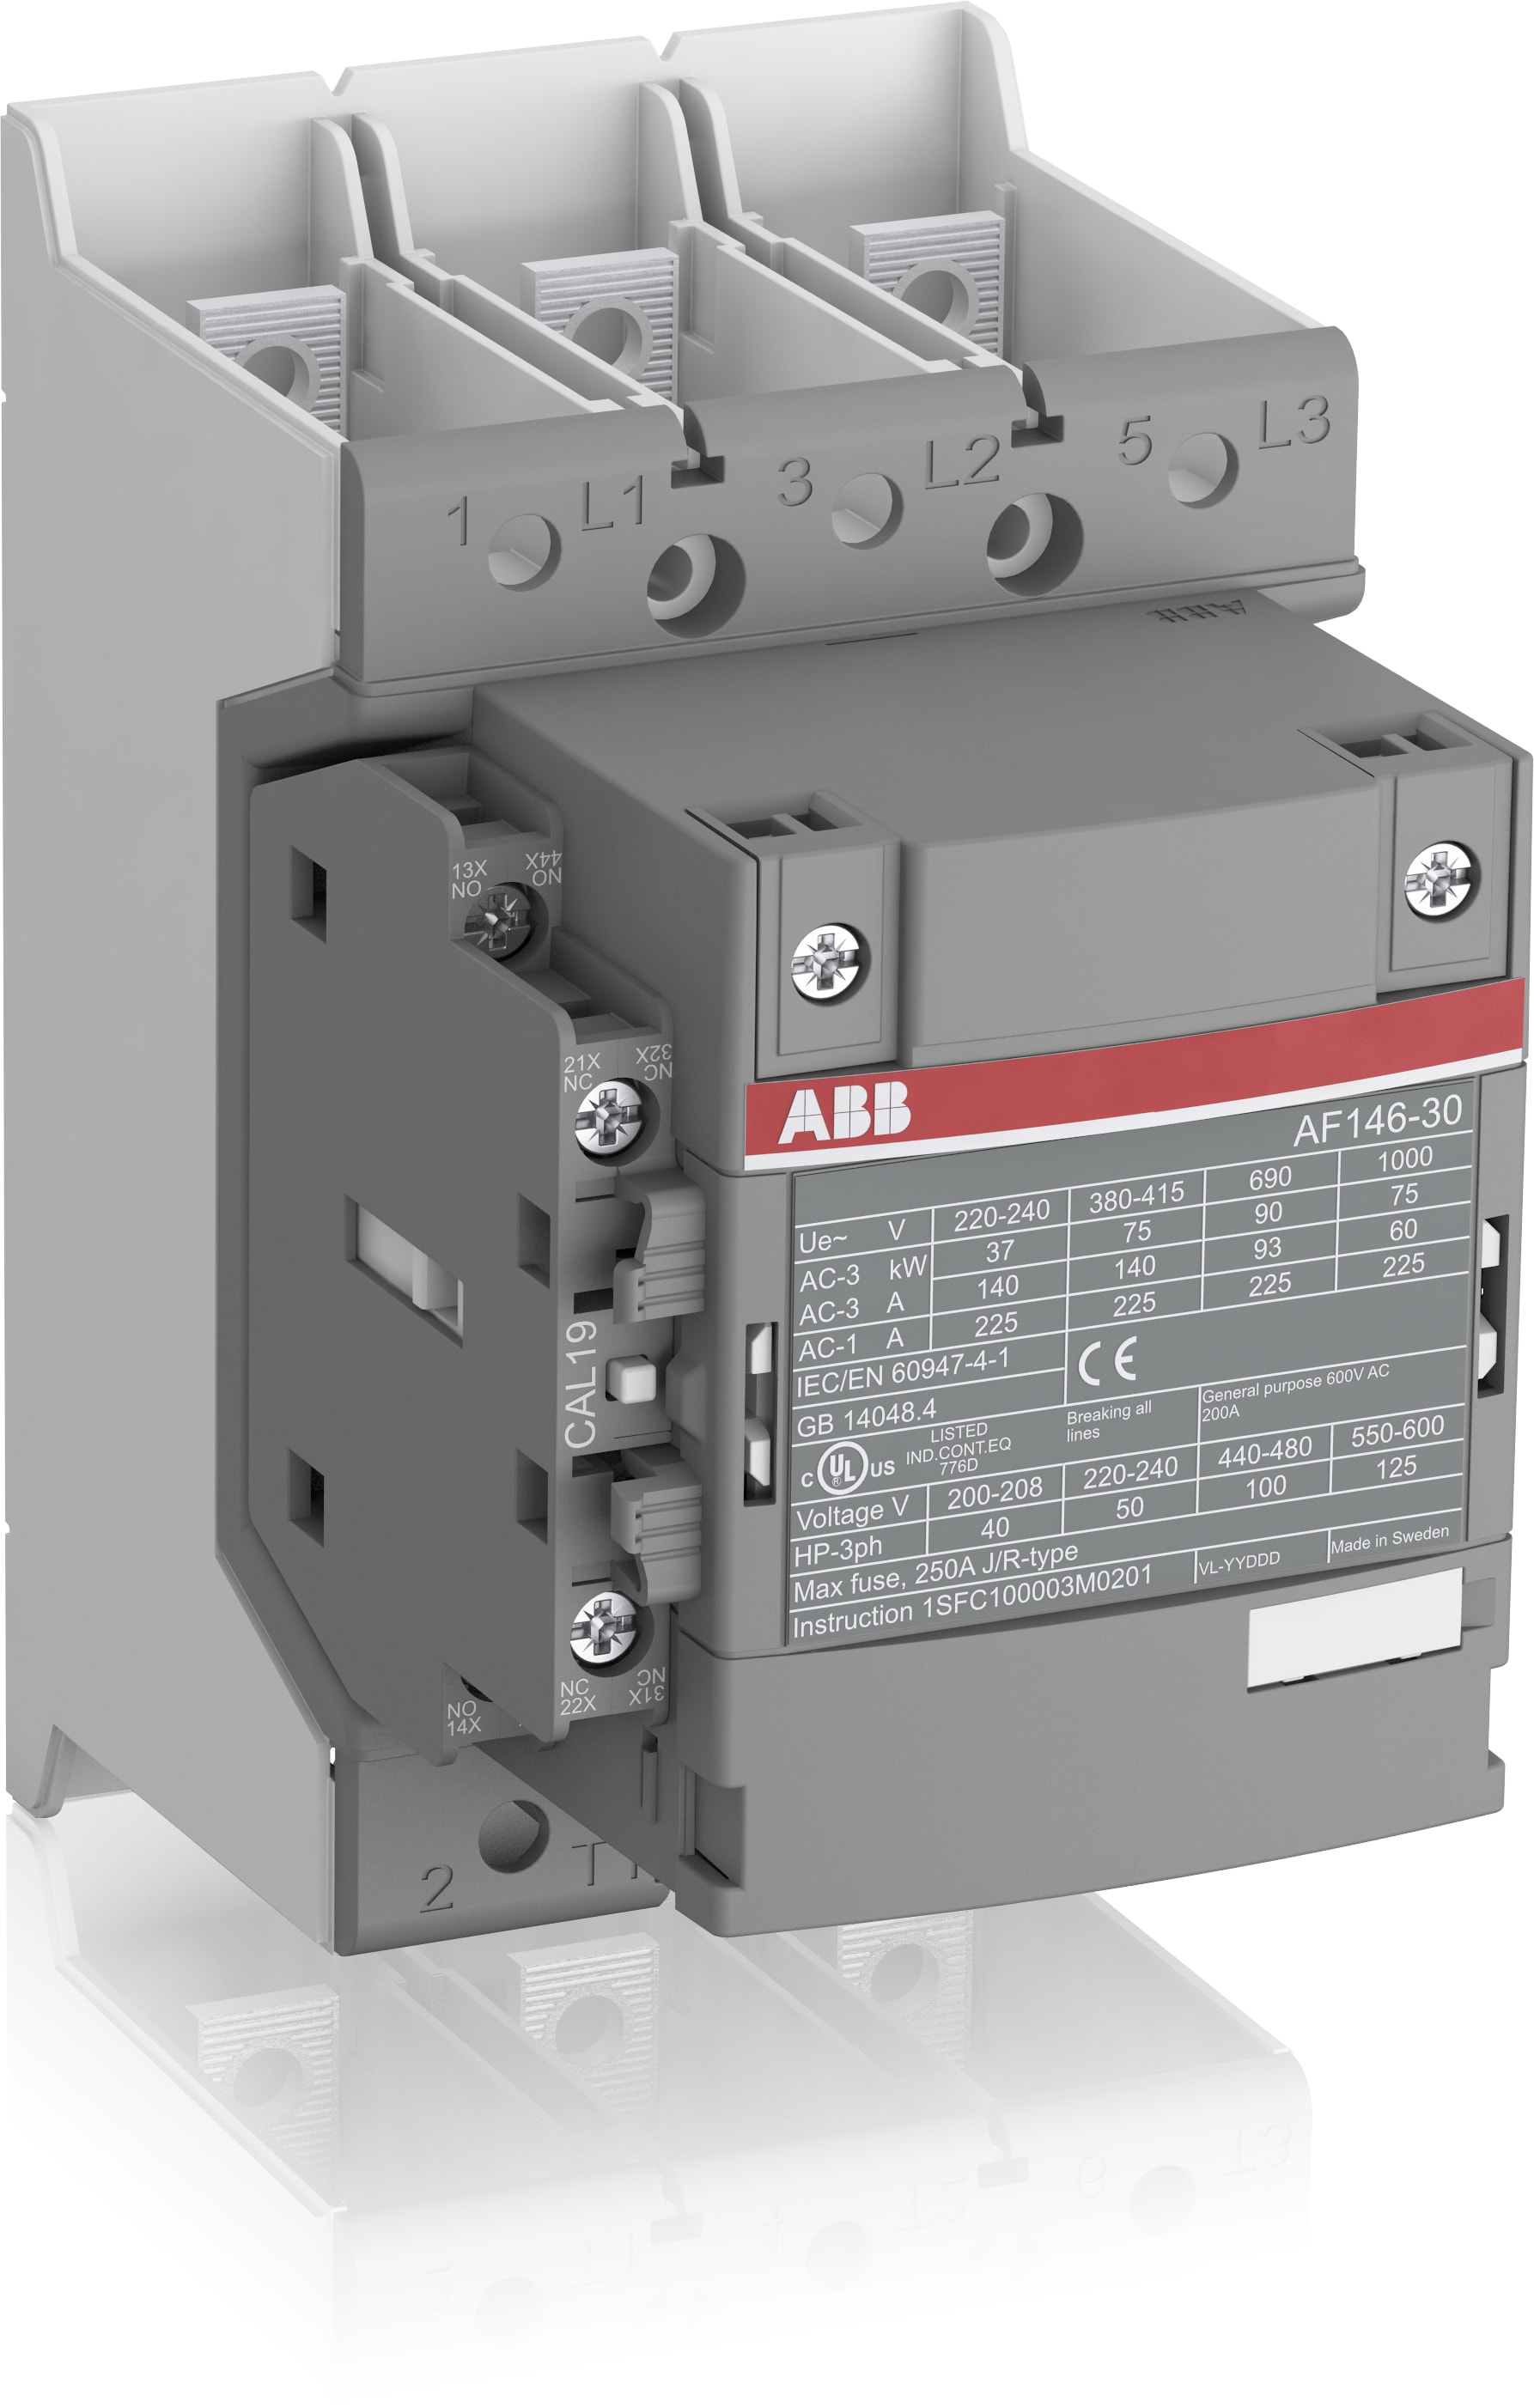 ABB Electrification - AF146-30-11-14B 250-500V 50/60Hz/DC - Kontaktor med skinnetilkobling. Med 1NO+1NC hjelpekontakt.